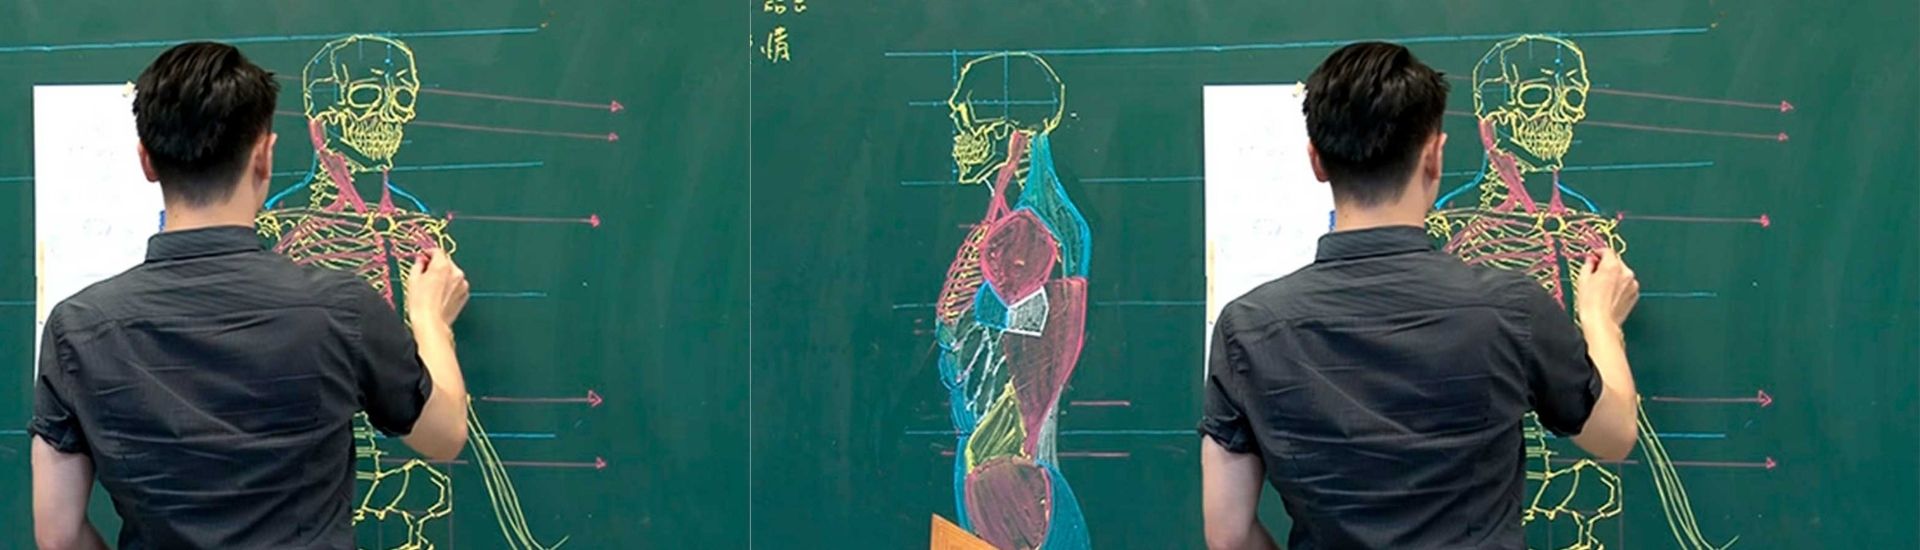 Chuang-Bin Chung, profesor que dibuja el libro de biología en la pizarra